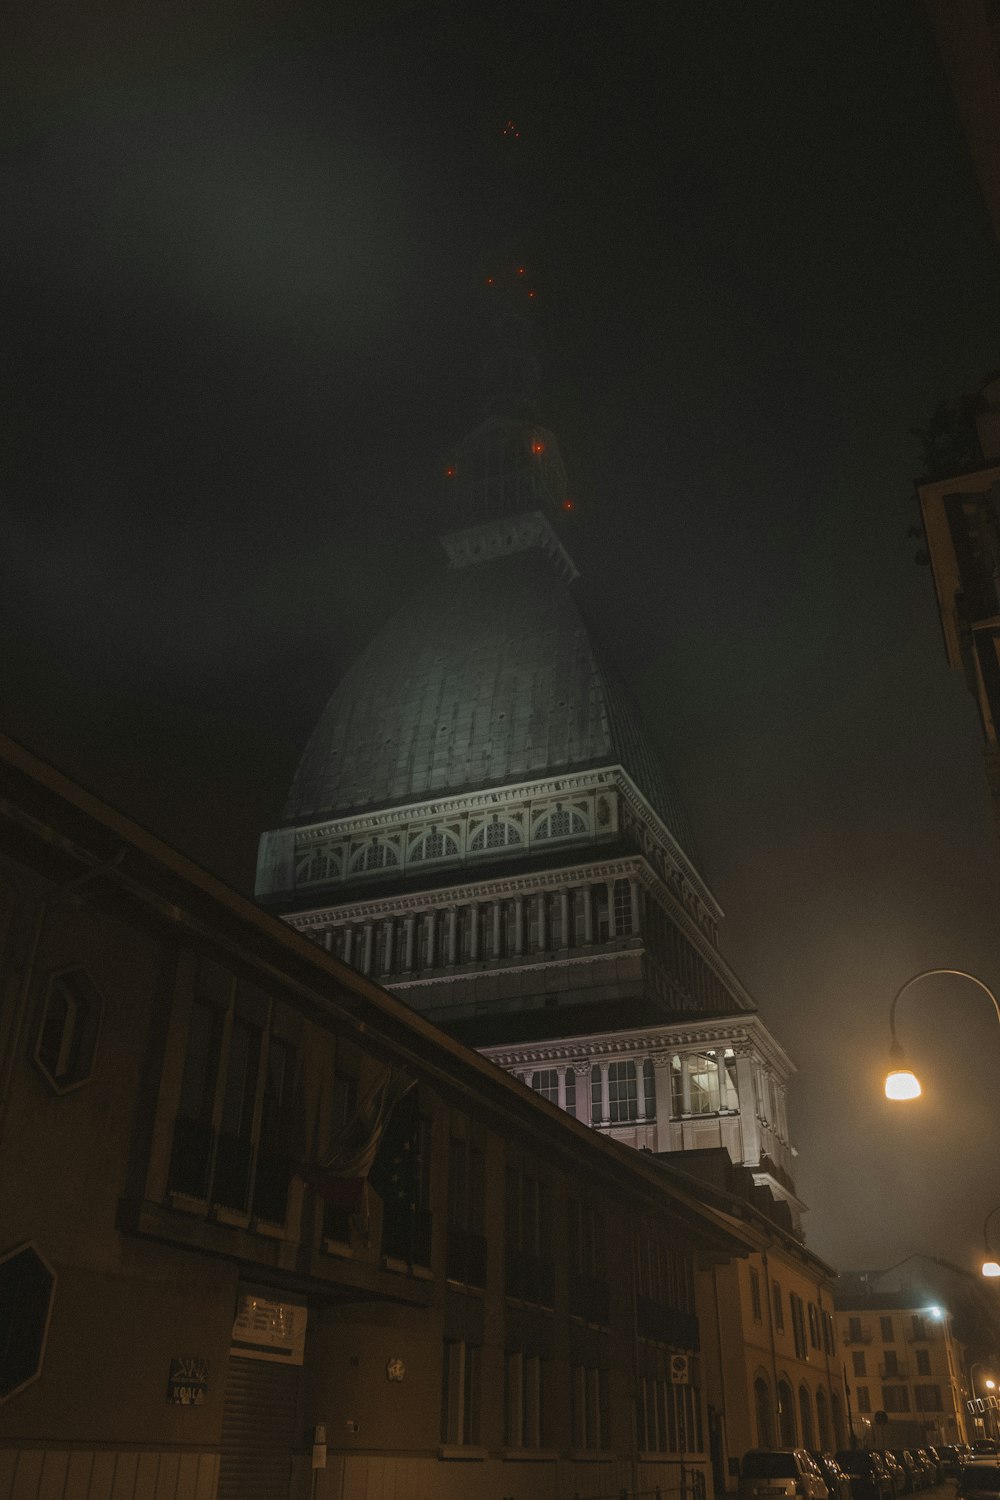 Un edificio muy alto con una torre del reloj por la noche